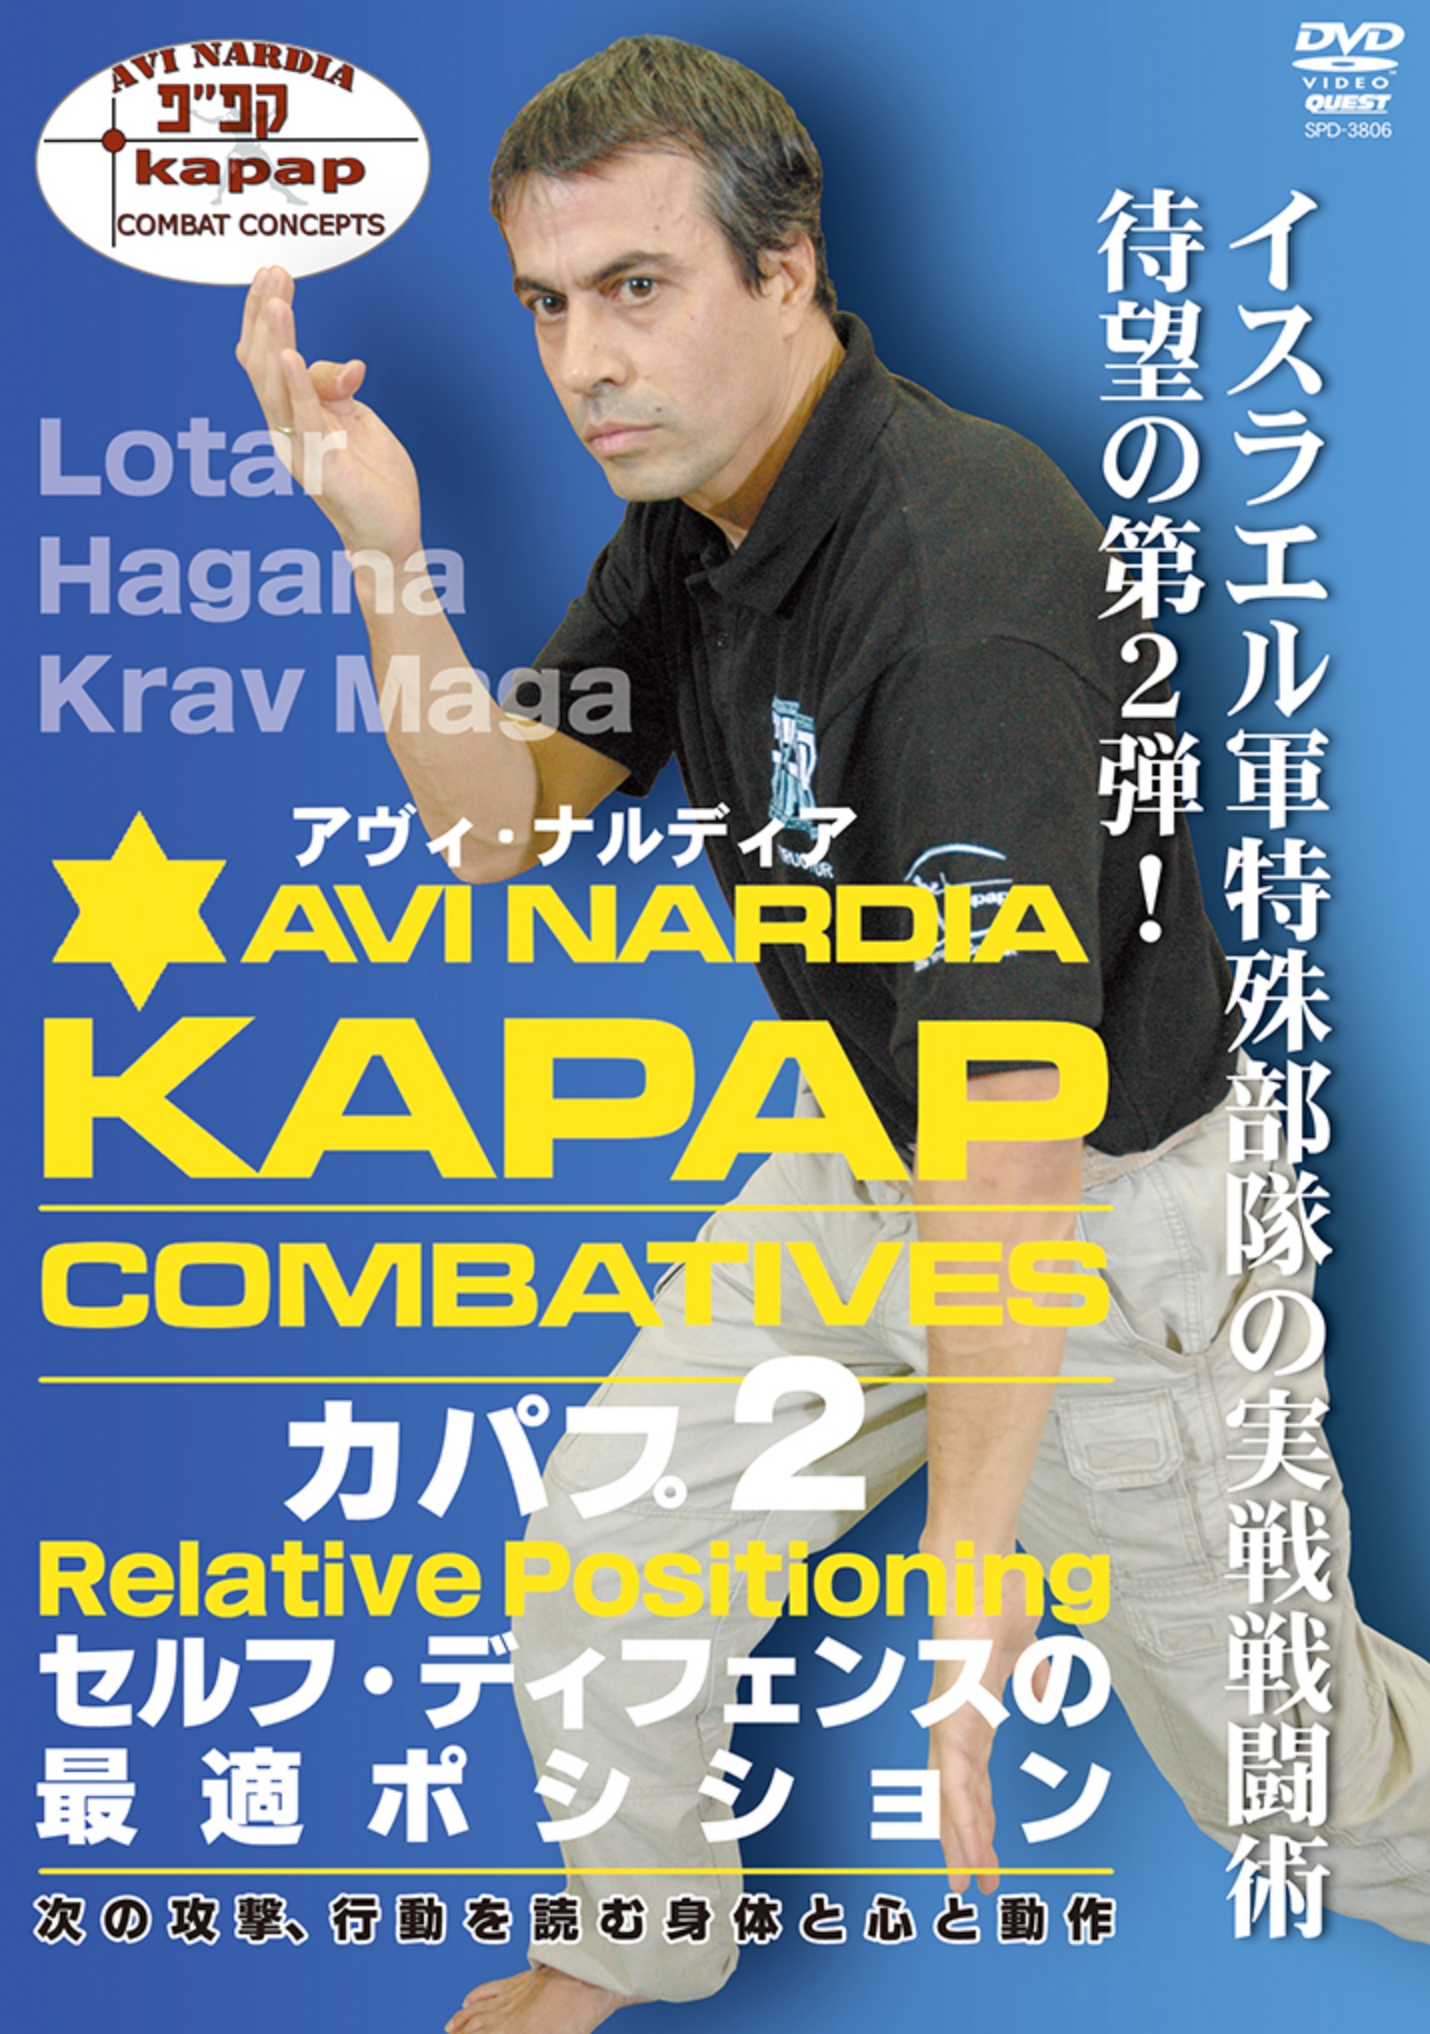 Kapap Combatives DVD 2: Relative Positioning with Avi Nardia - Budovideos Inc